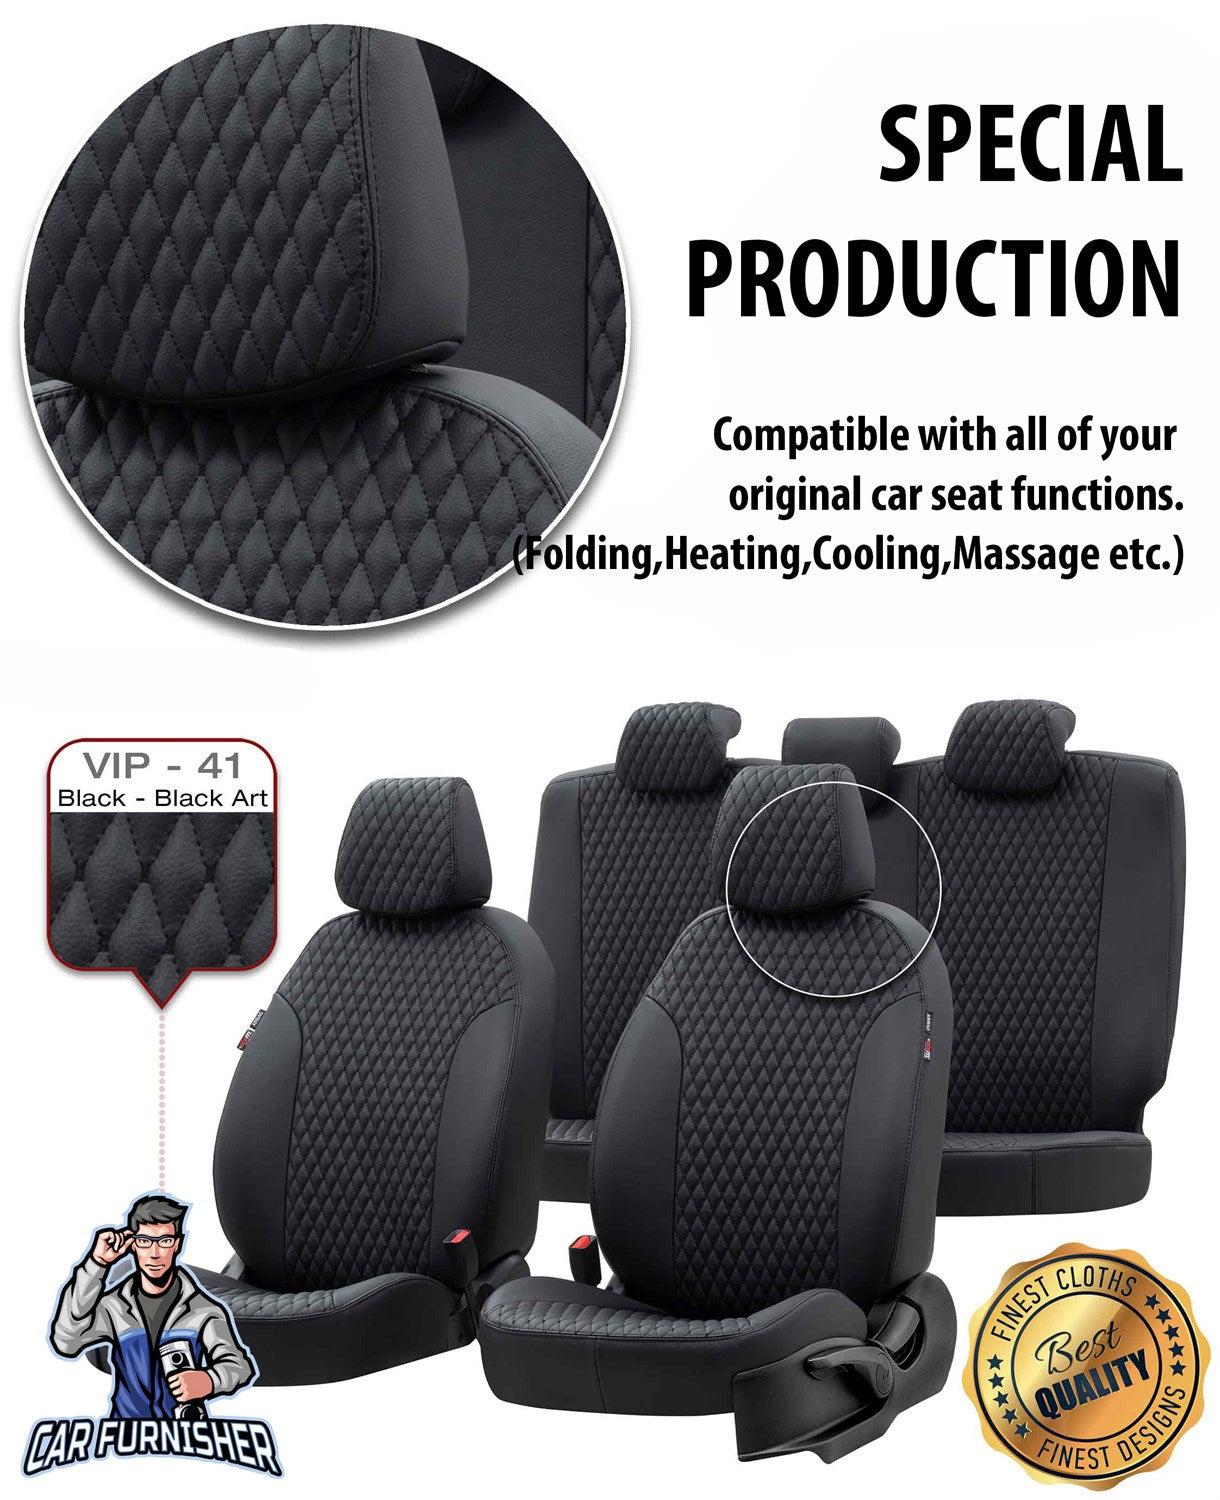 Fiat Doblo Seat Covers Amsterdam Leather Design Dark Gray Leather